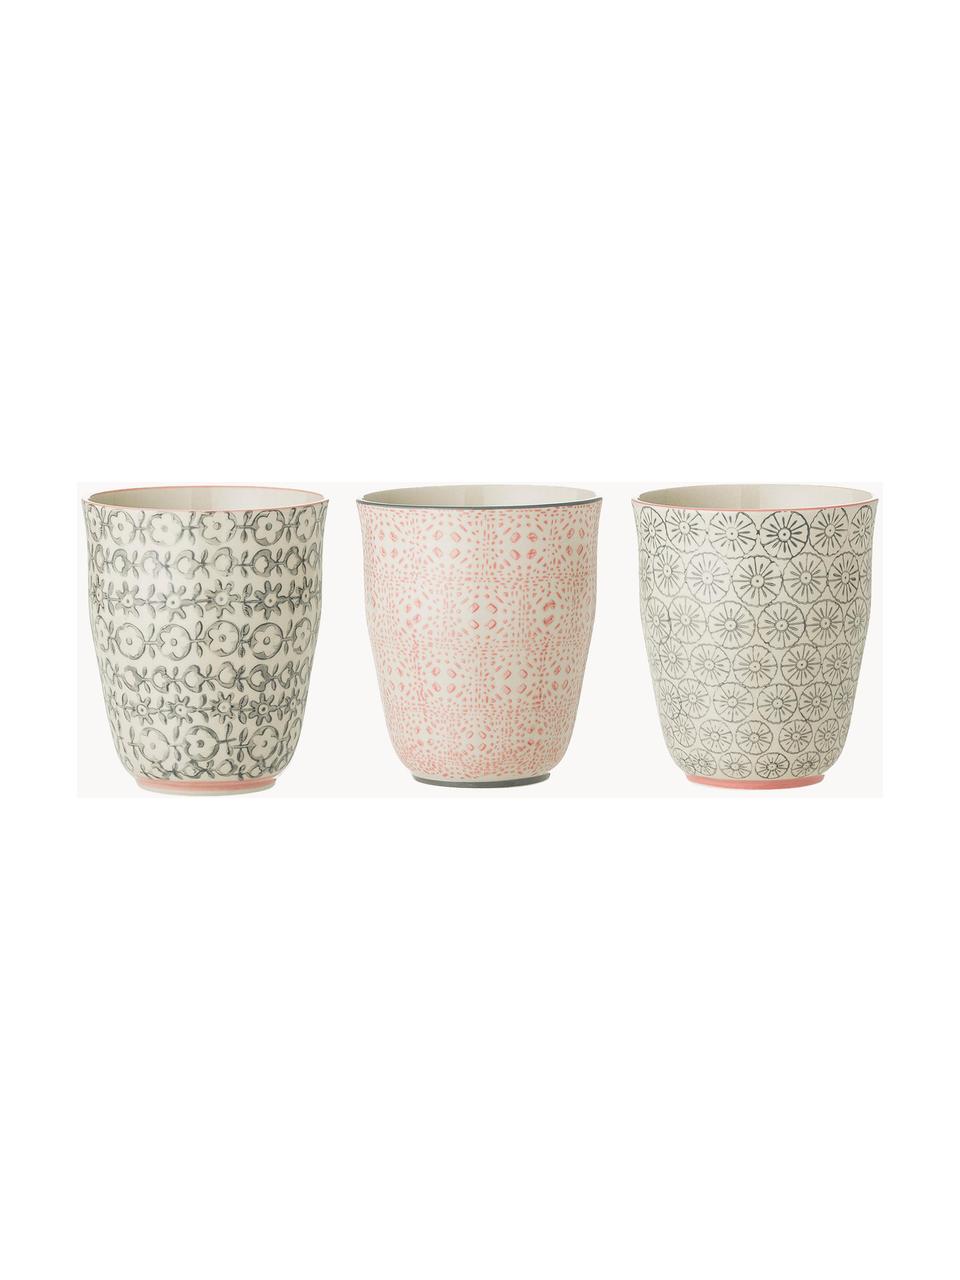 Sada pohárků s malými vzory Cécile vzor, 3 díly, Porcelán, Béžová, šedá, růžová, Ø 9 cm, V 10 cm